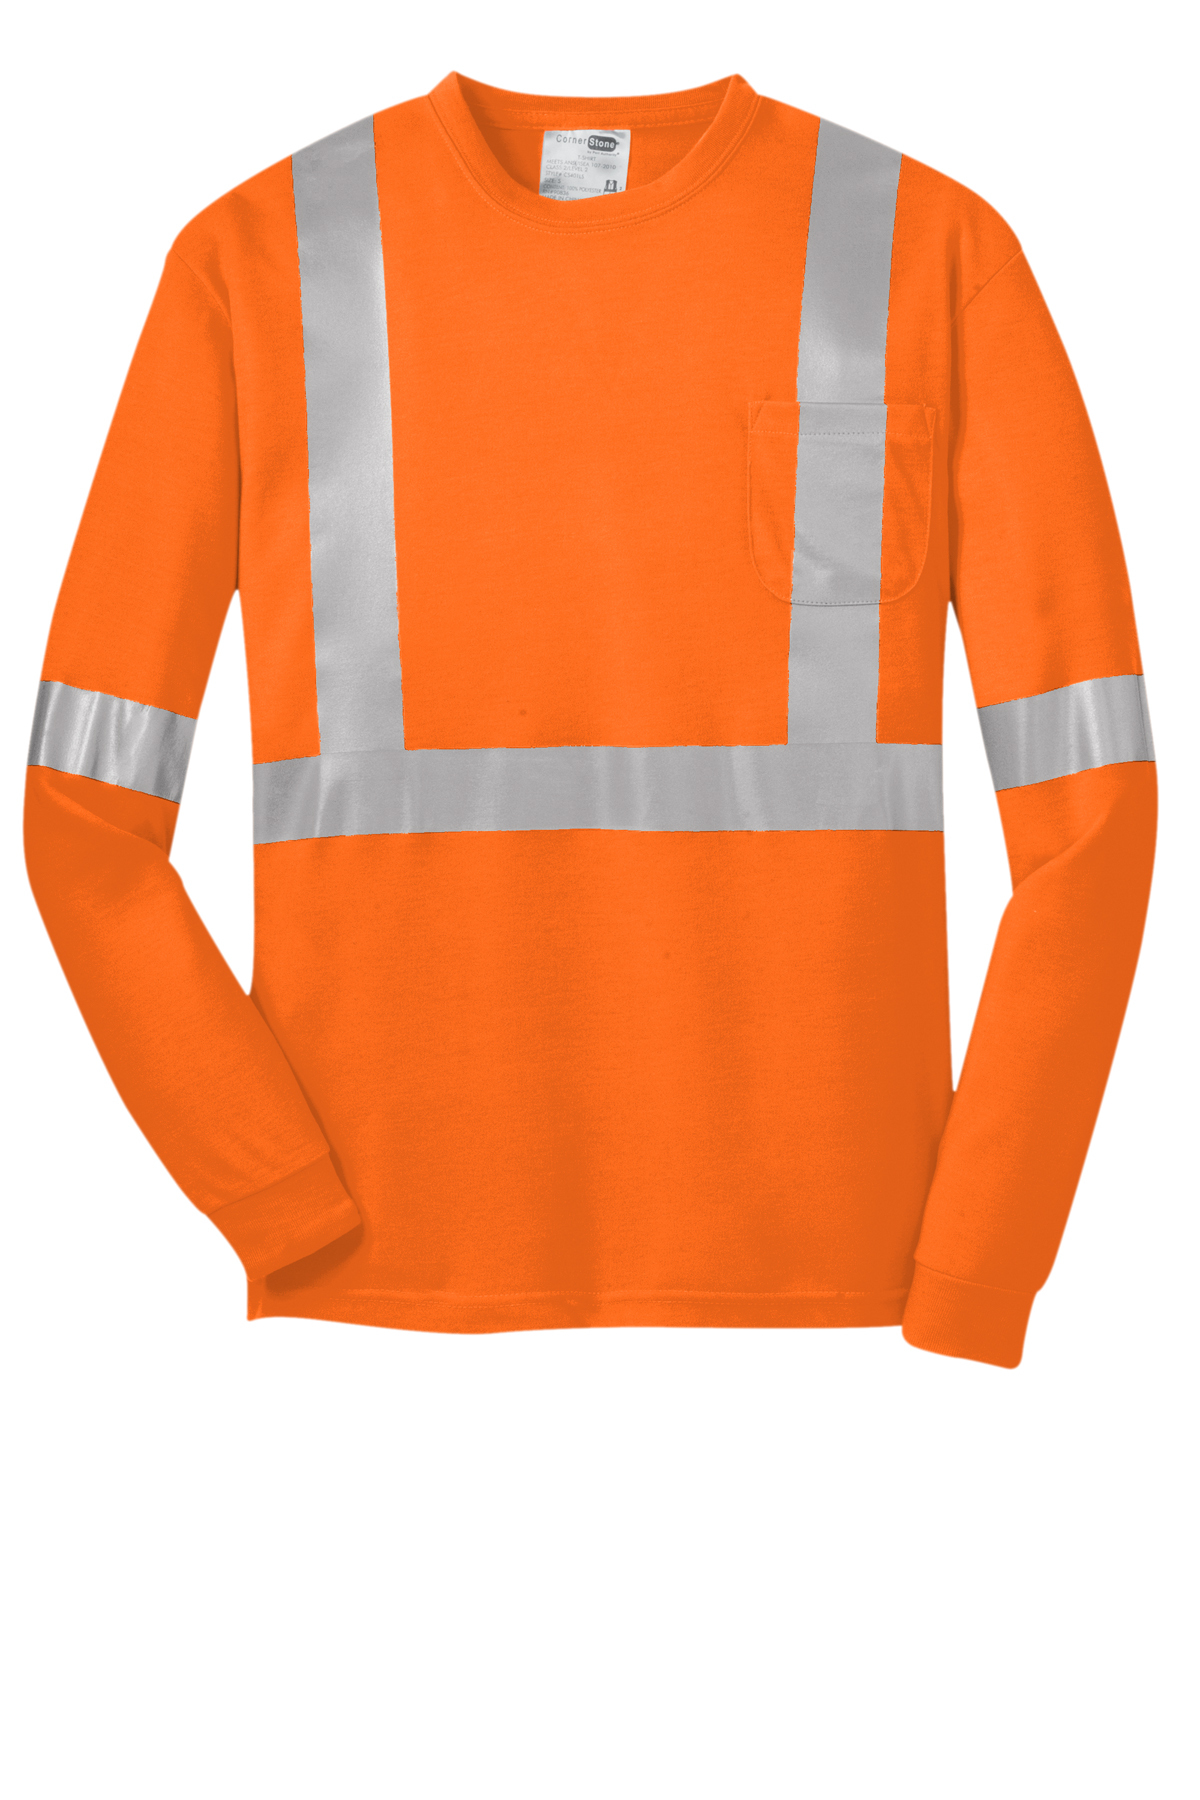 CornerStone ANSI 107 Class 2 Long Sleeve Safety T-Shirt | Product | SanMar